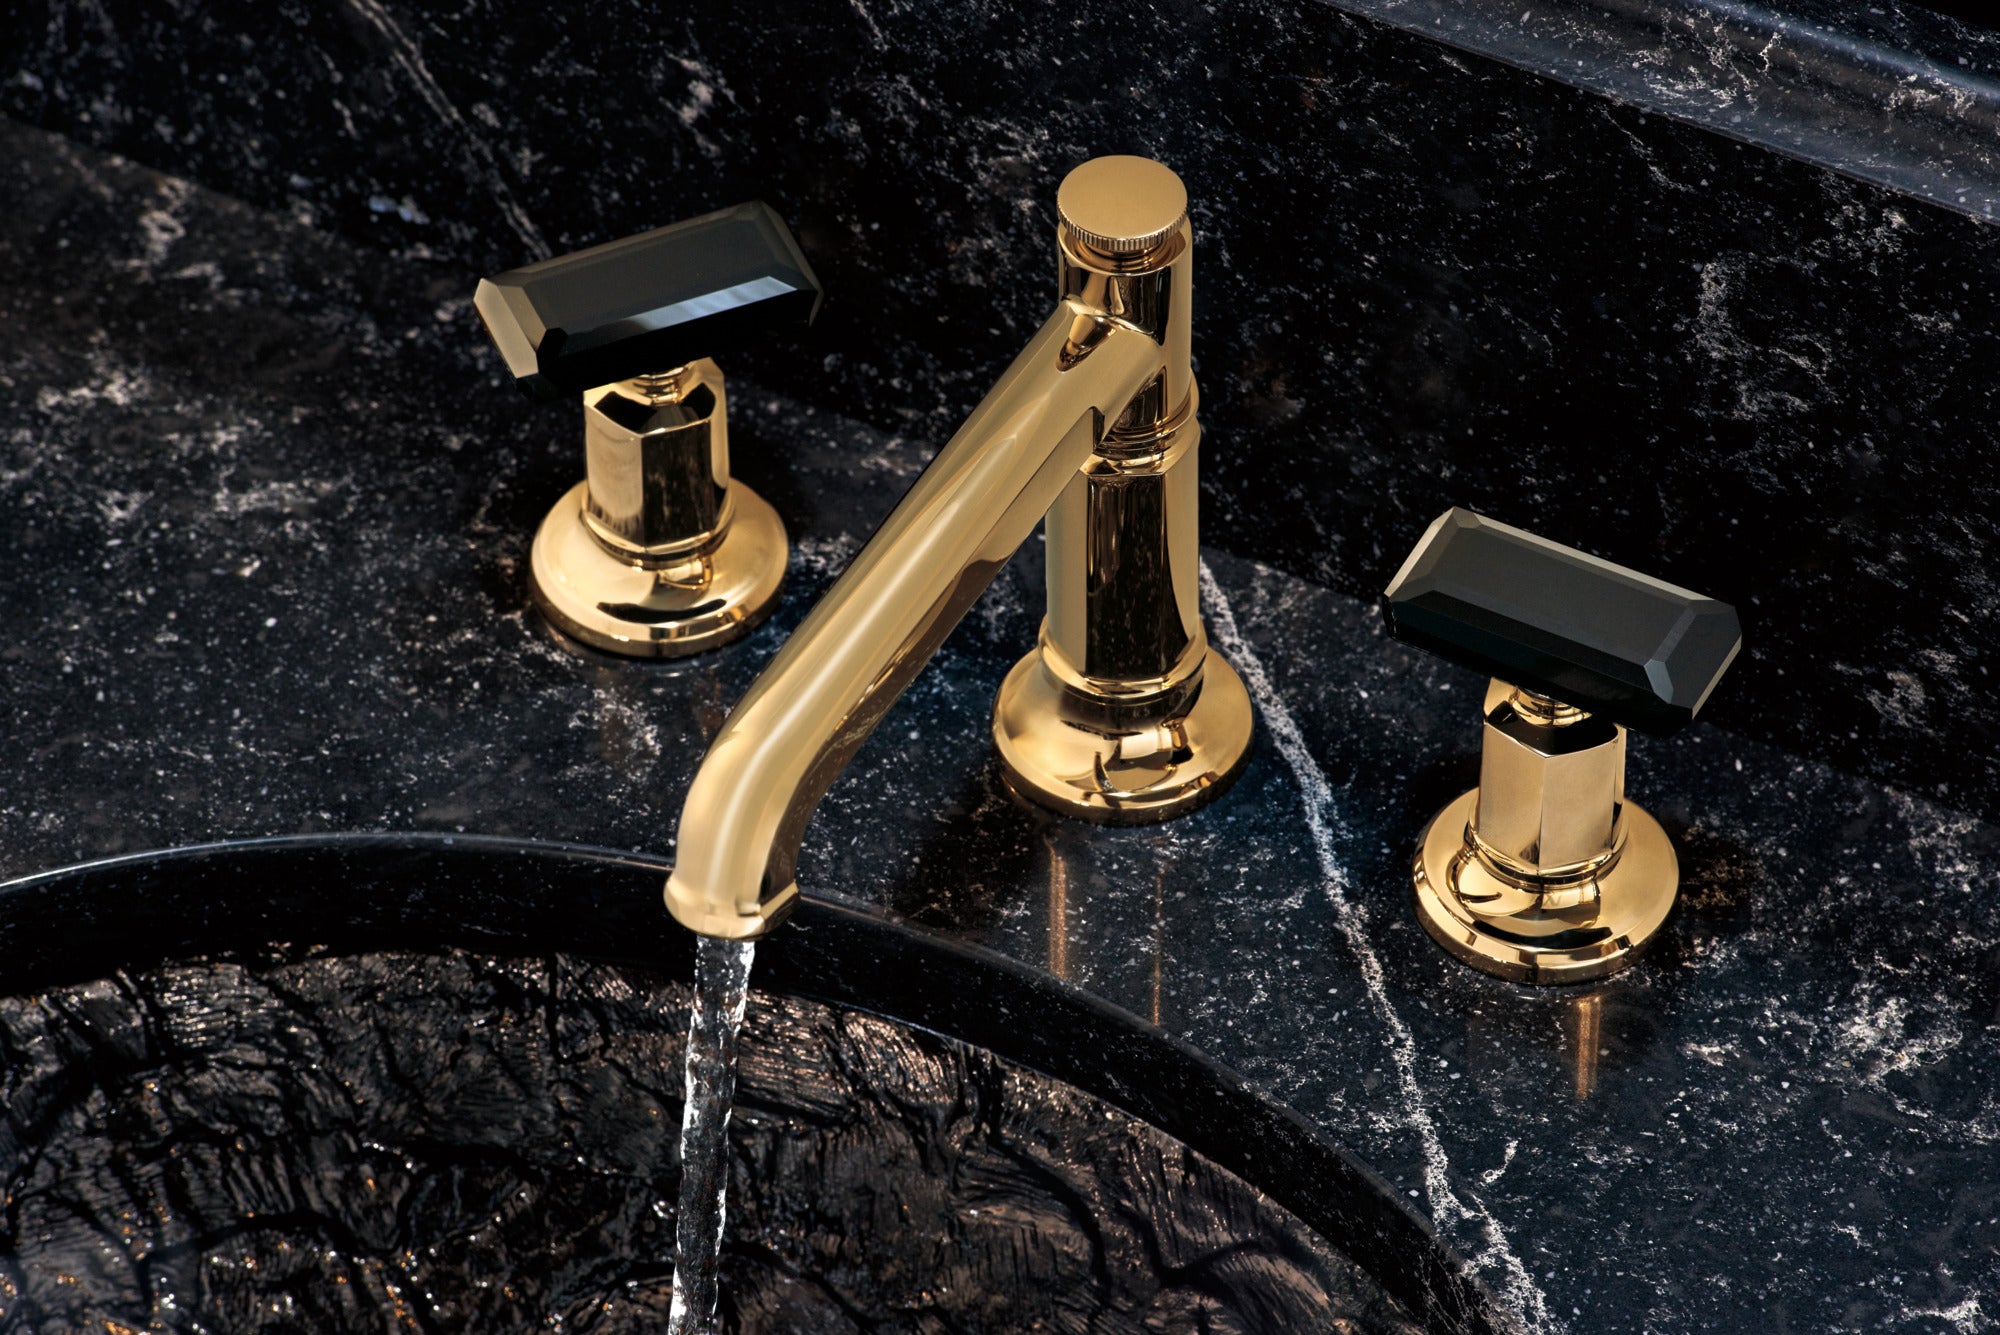 polished gold lavatory faucet